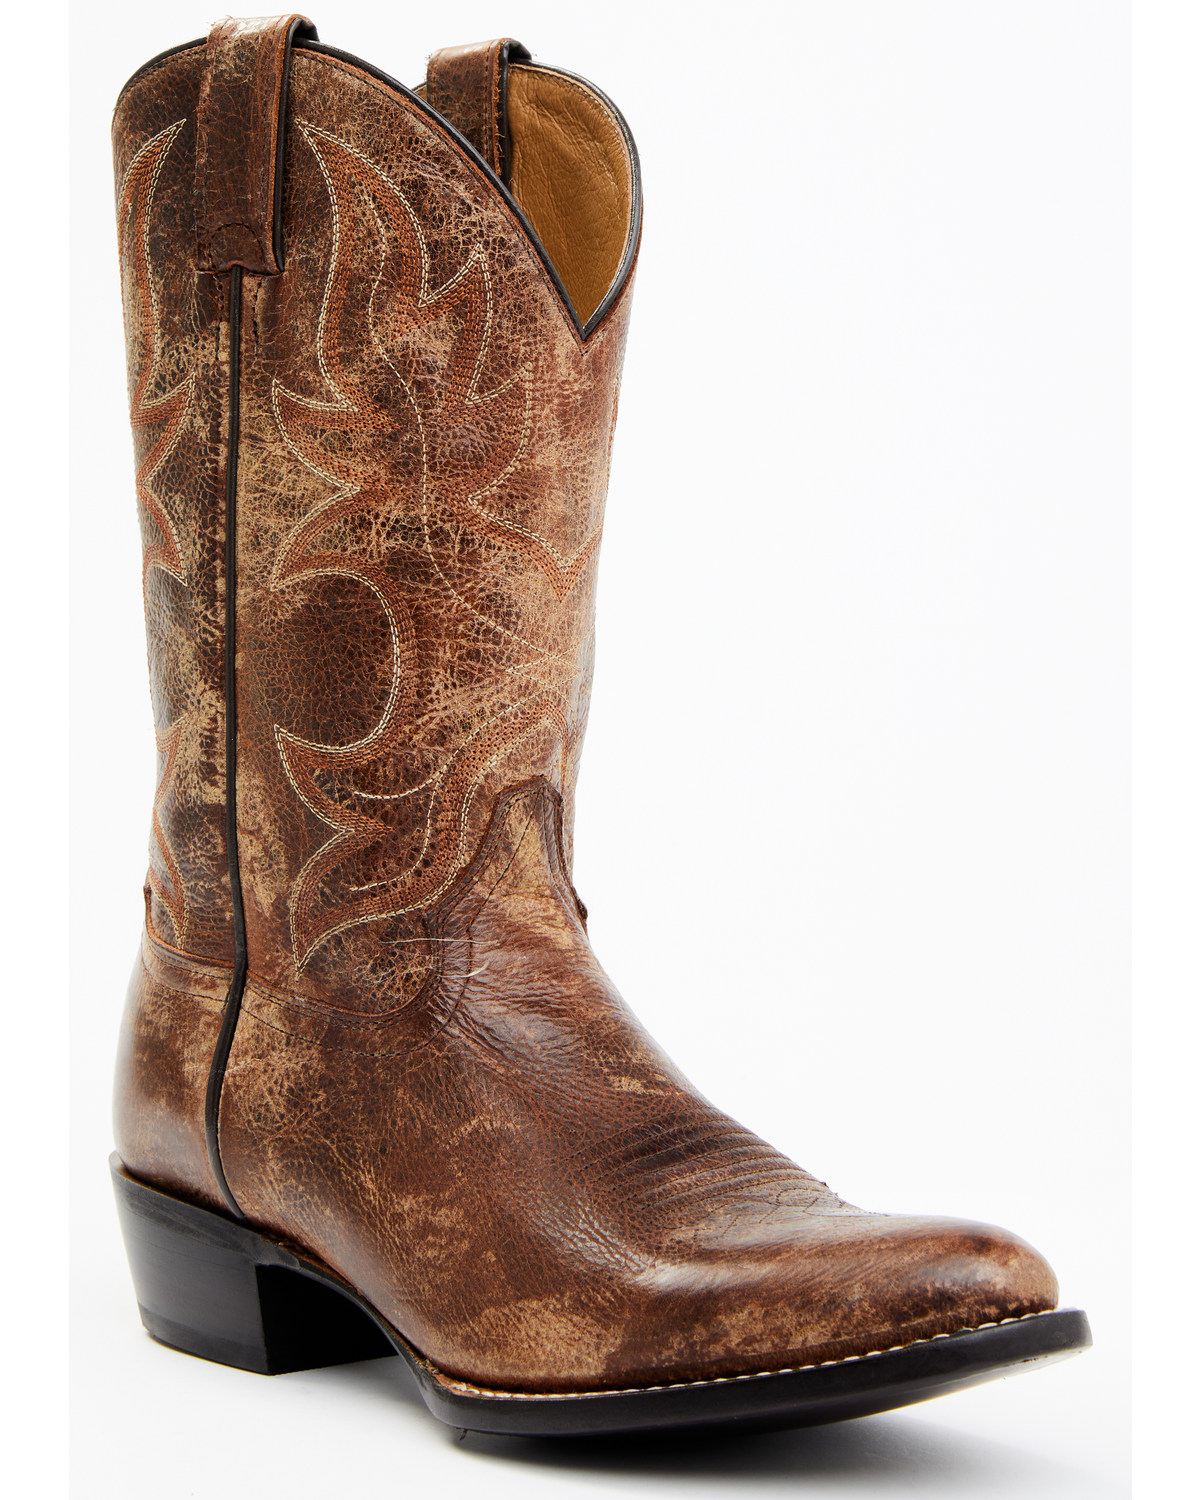 Cody James Men's Larsen Western Boots - Medium Toe